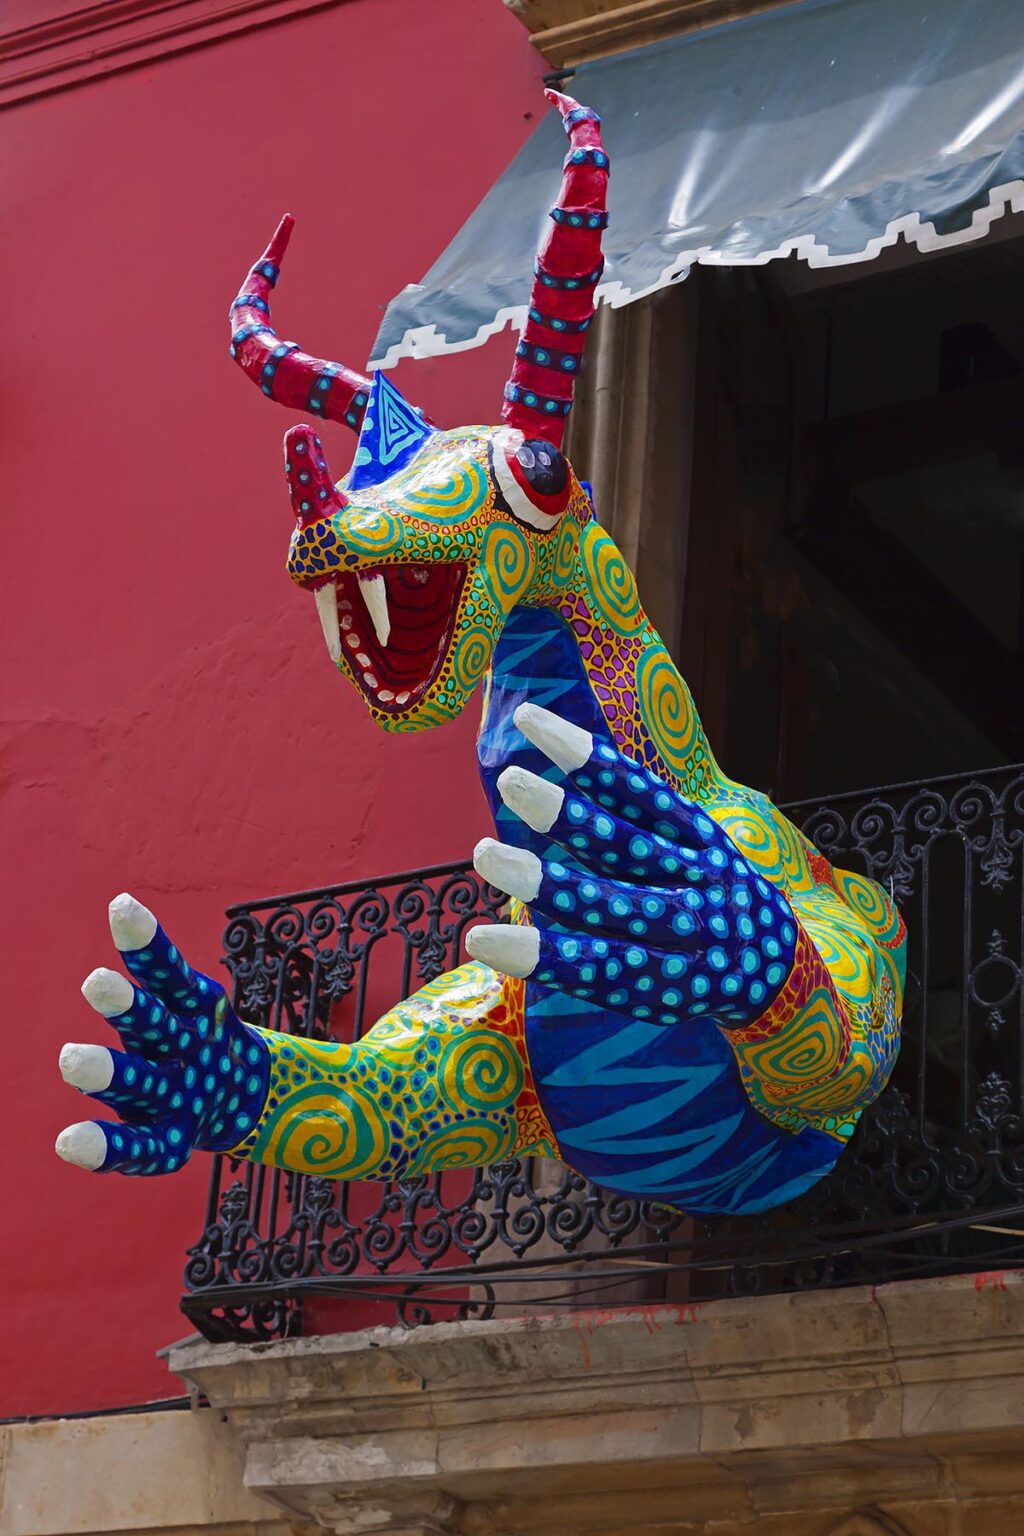 FANTASY ANIMAL paper mache figures as street art - OAXACA, MEXICO